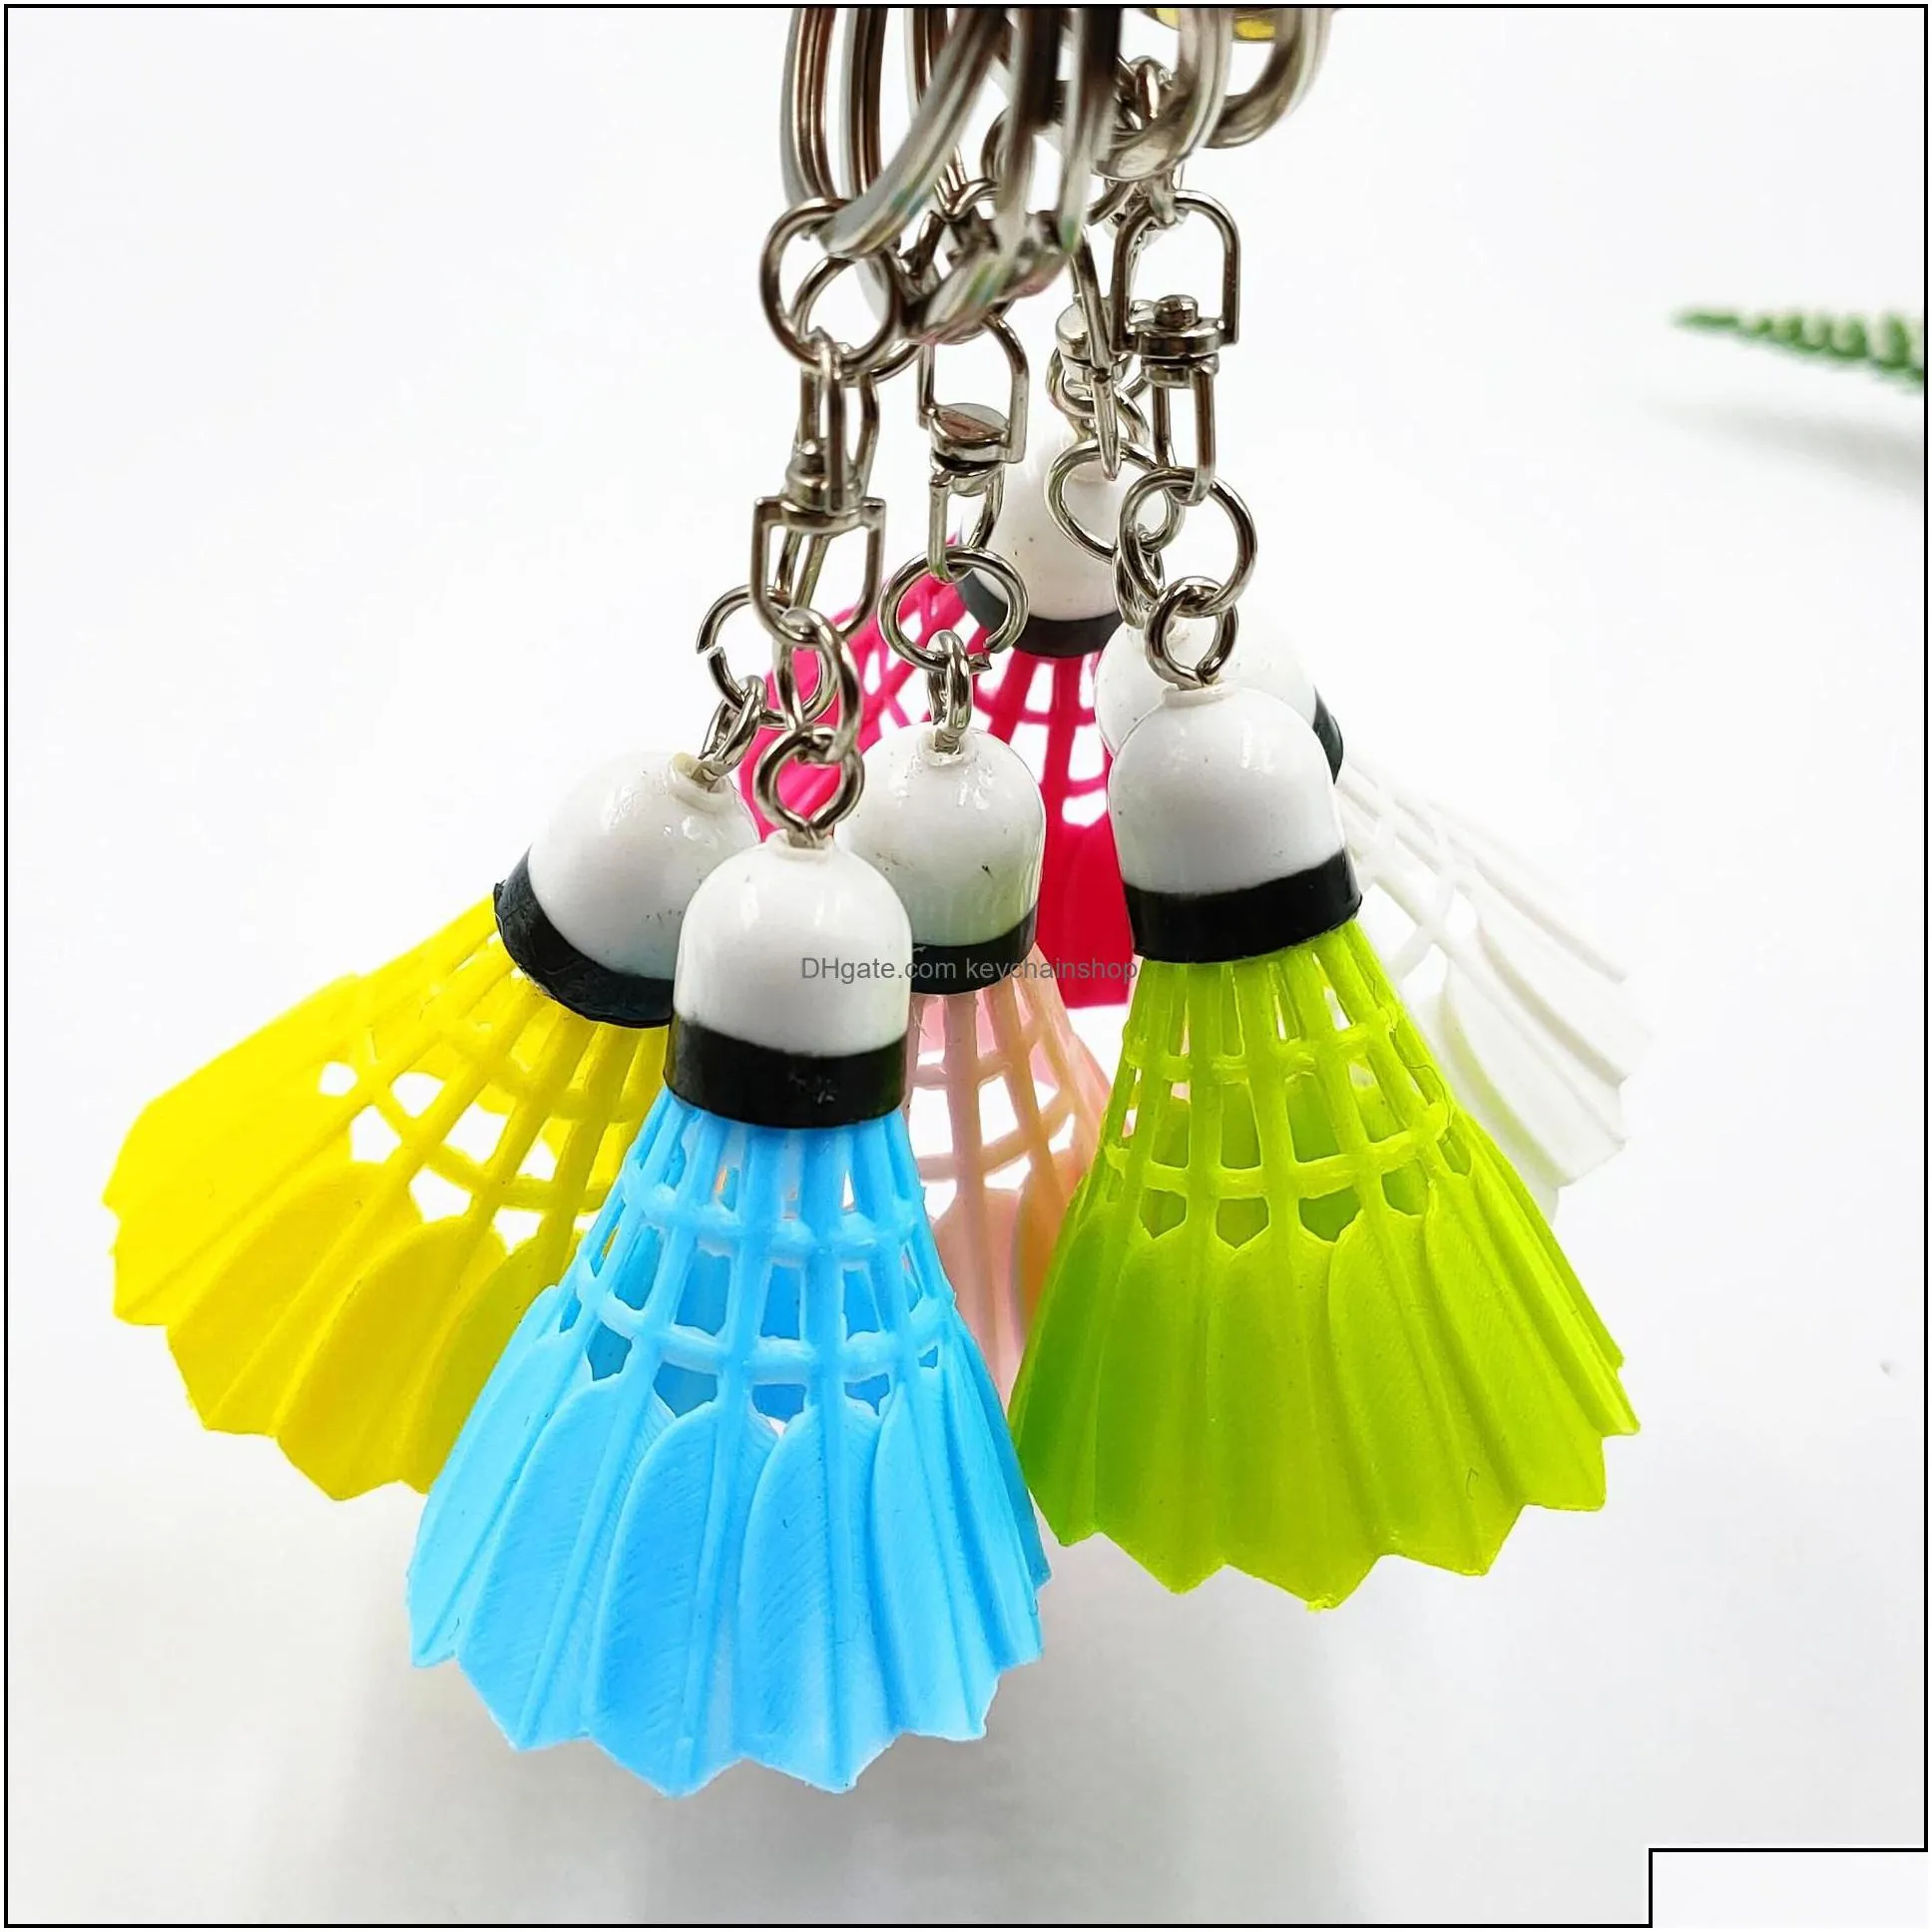 keychains fashion accessories 6 colors creative mnini pvc badminton pendant sports small key chain bag charm car keyrings gi dhxb4